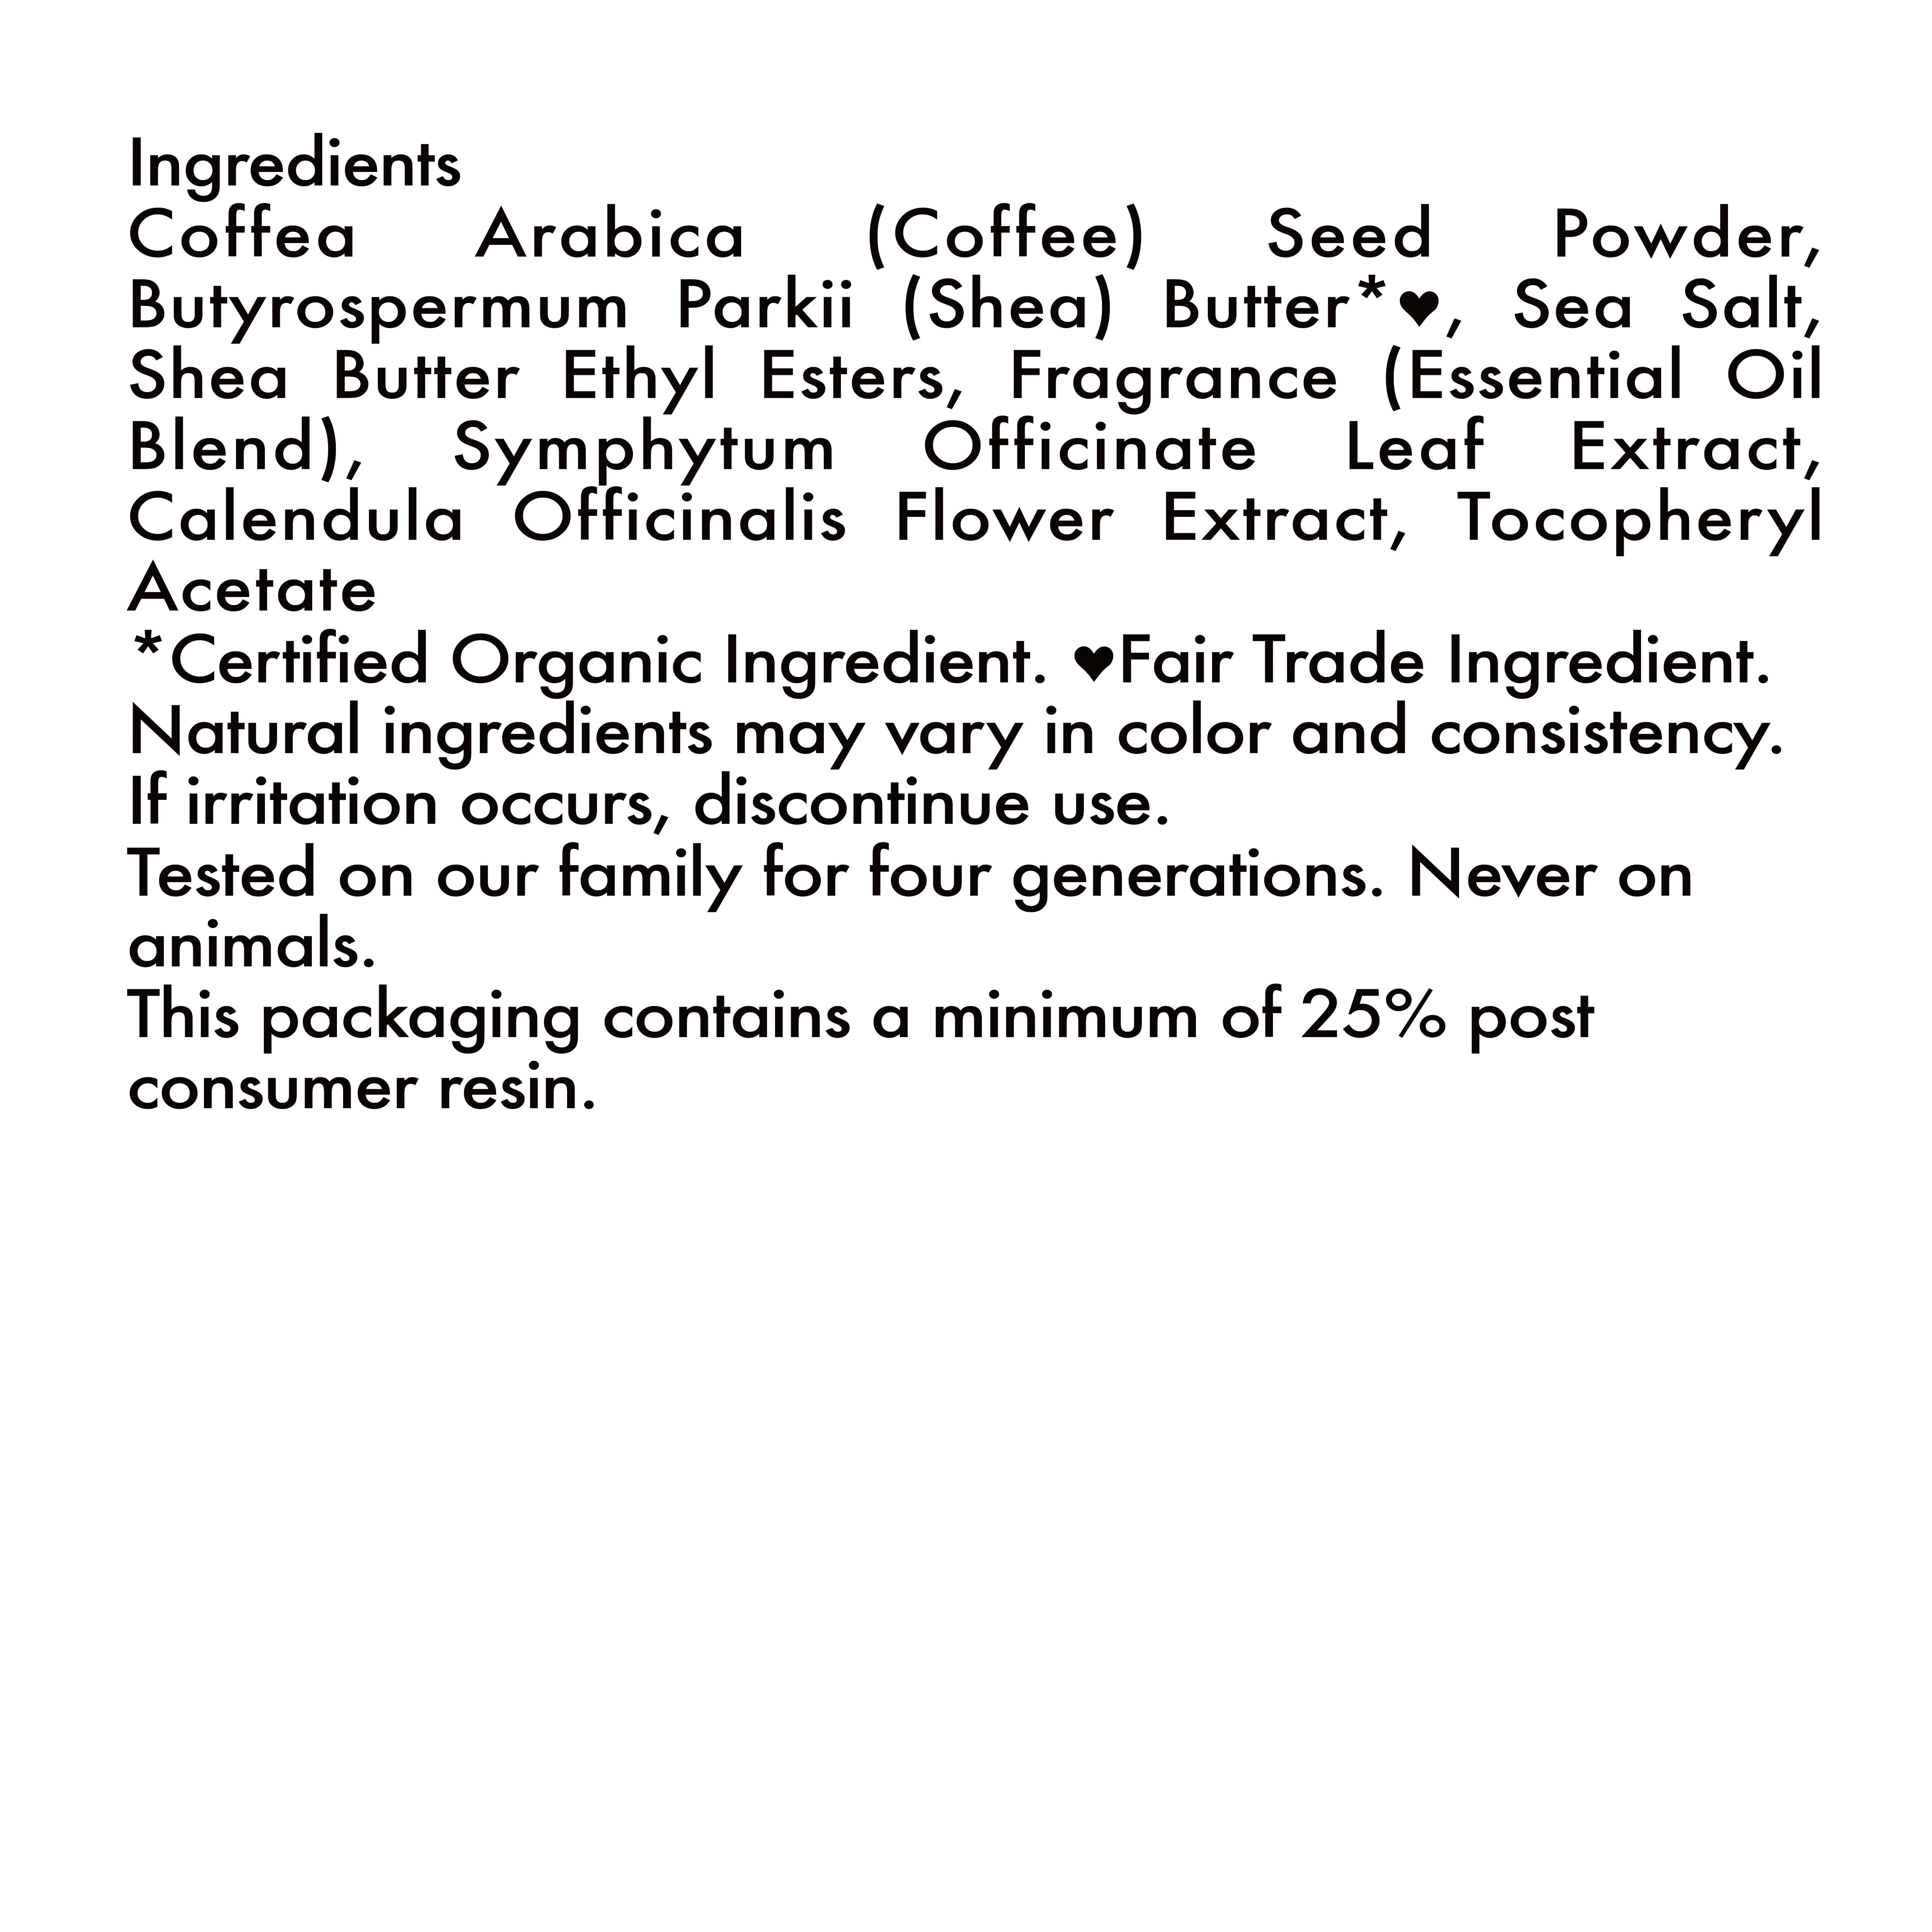 Muddy Stuff Organic Shea Butter: 8oz. Cellulite Coffee Scrub – Muddy Stuff  Body Works